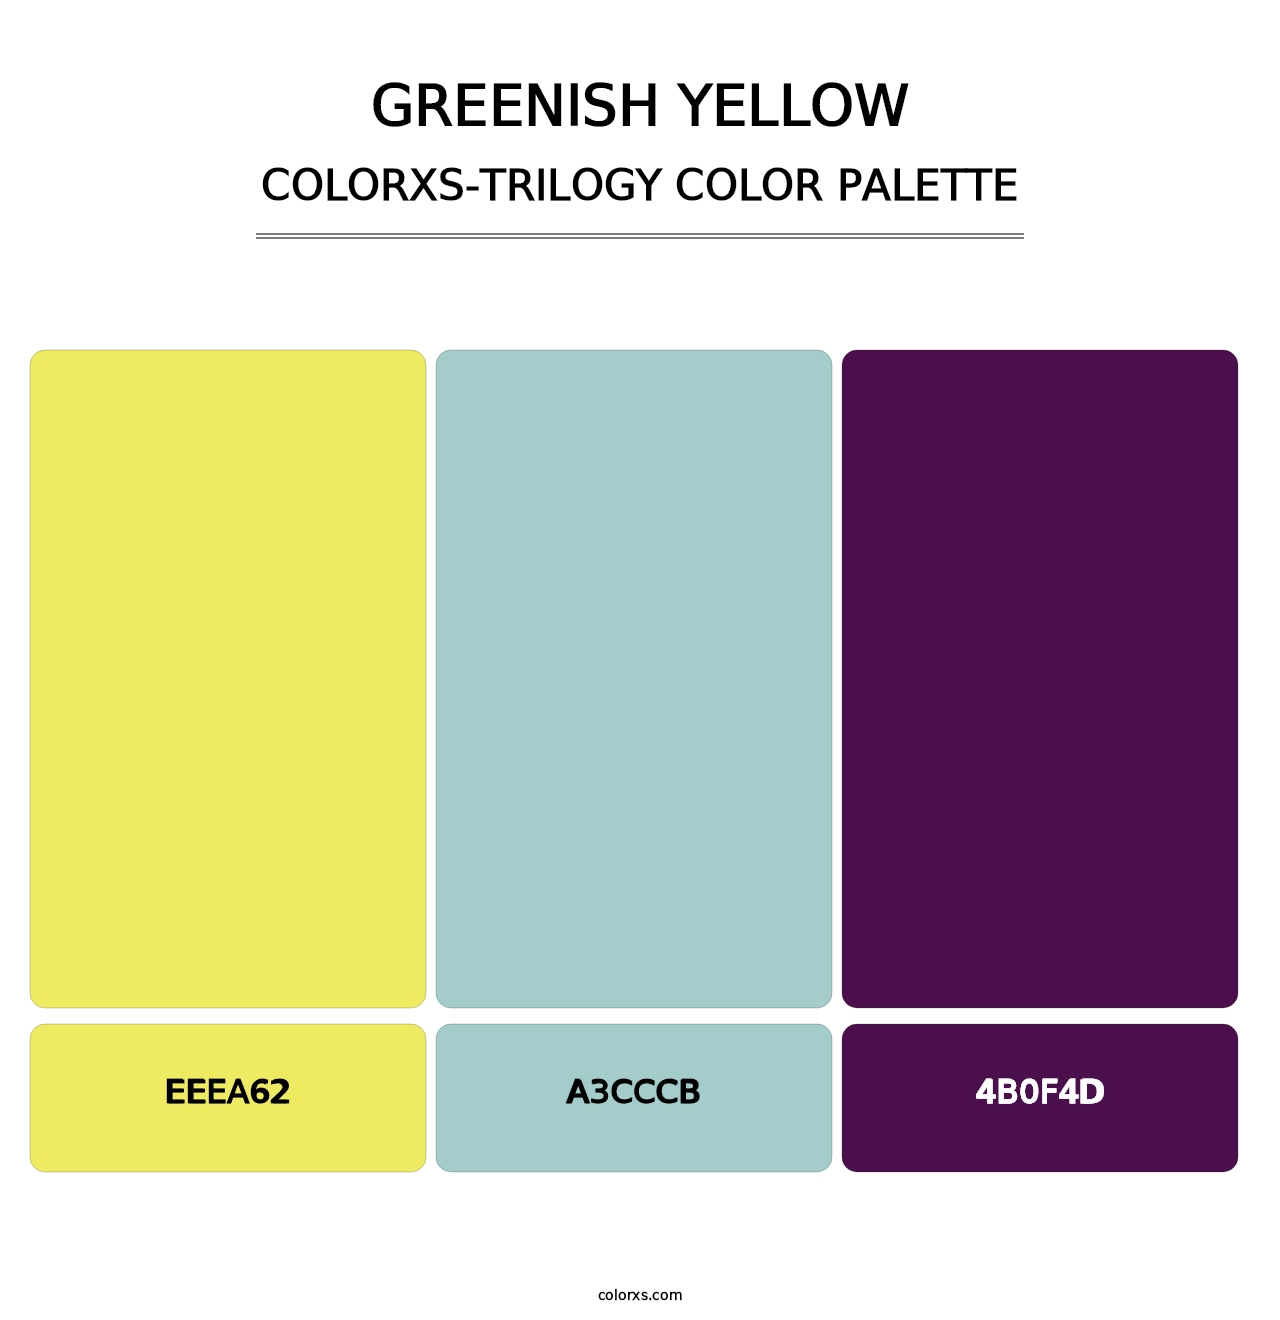 Greenish Yellow - Colorxs Trilogy Palette